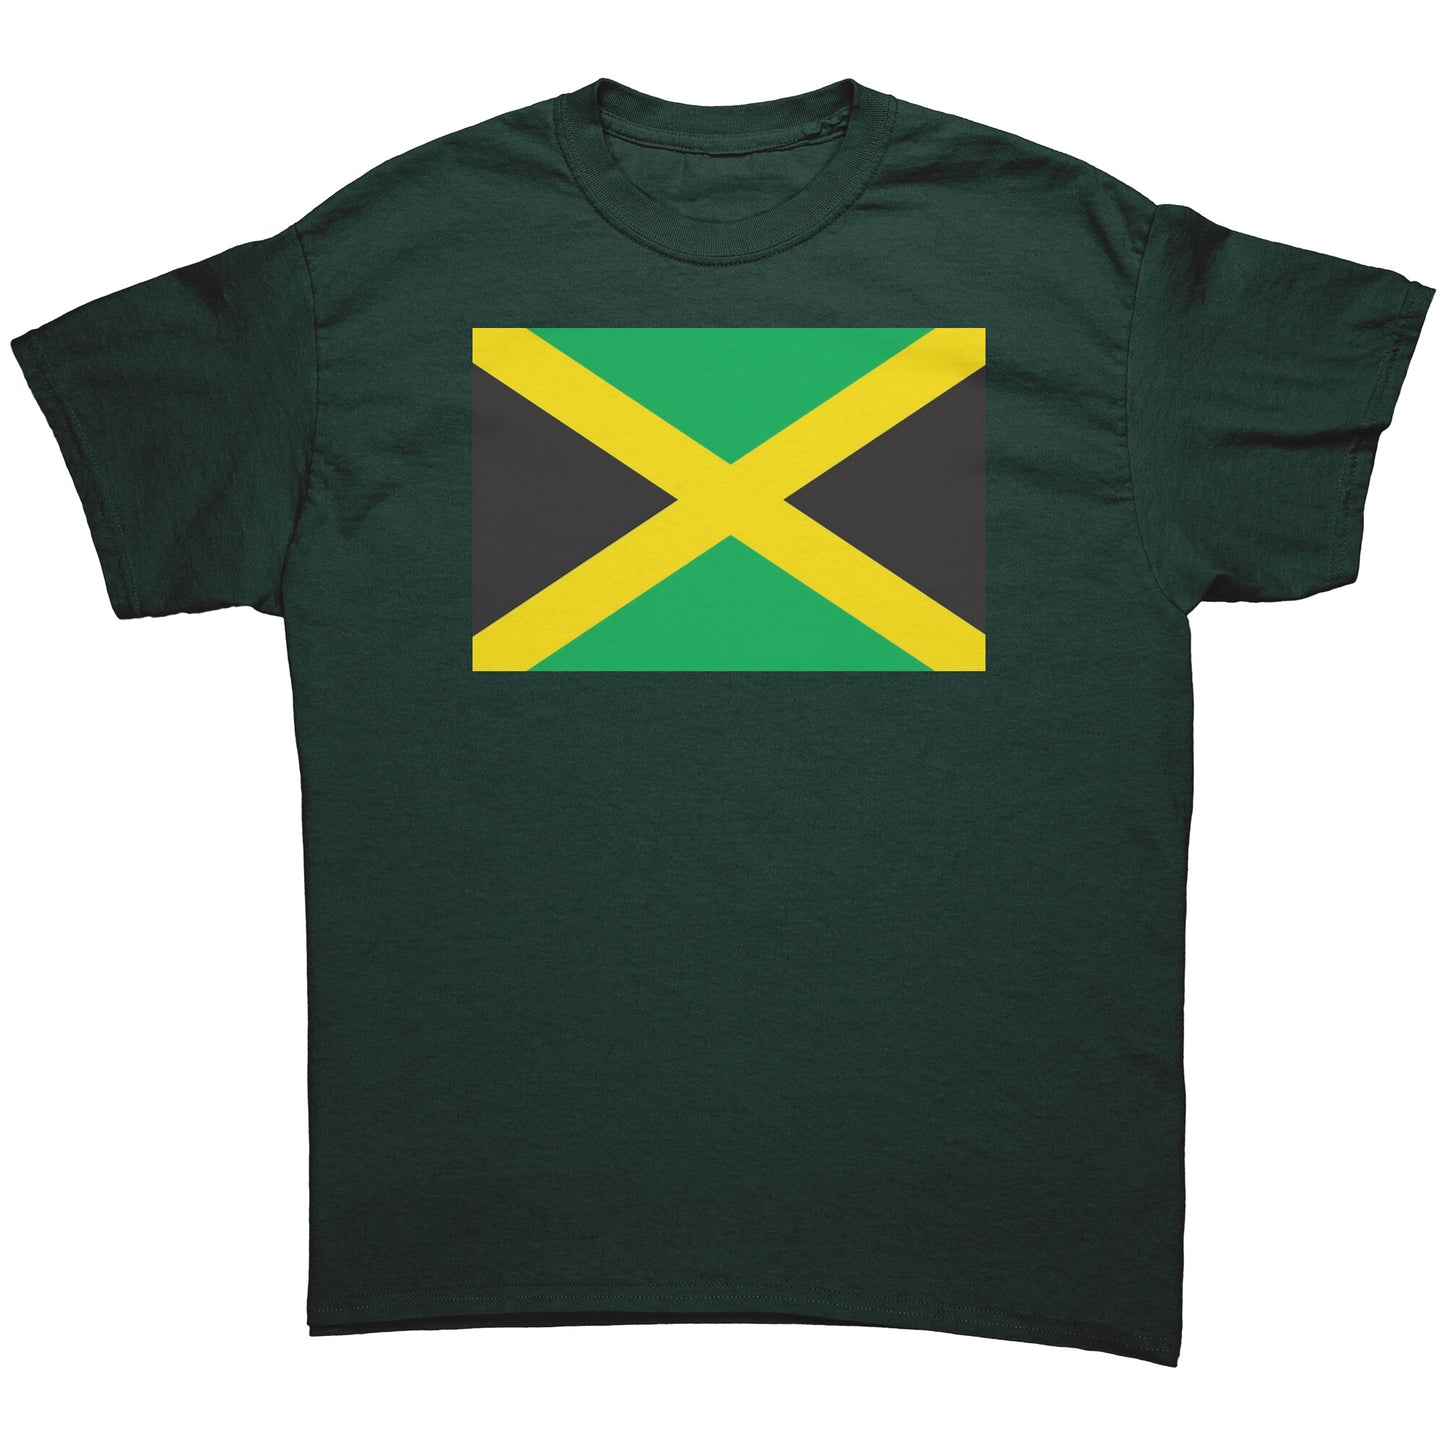 The flag of Jamaica